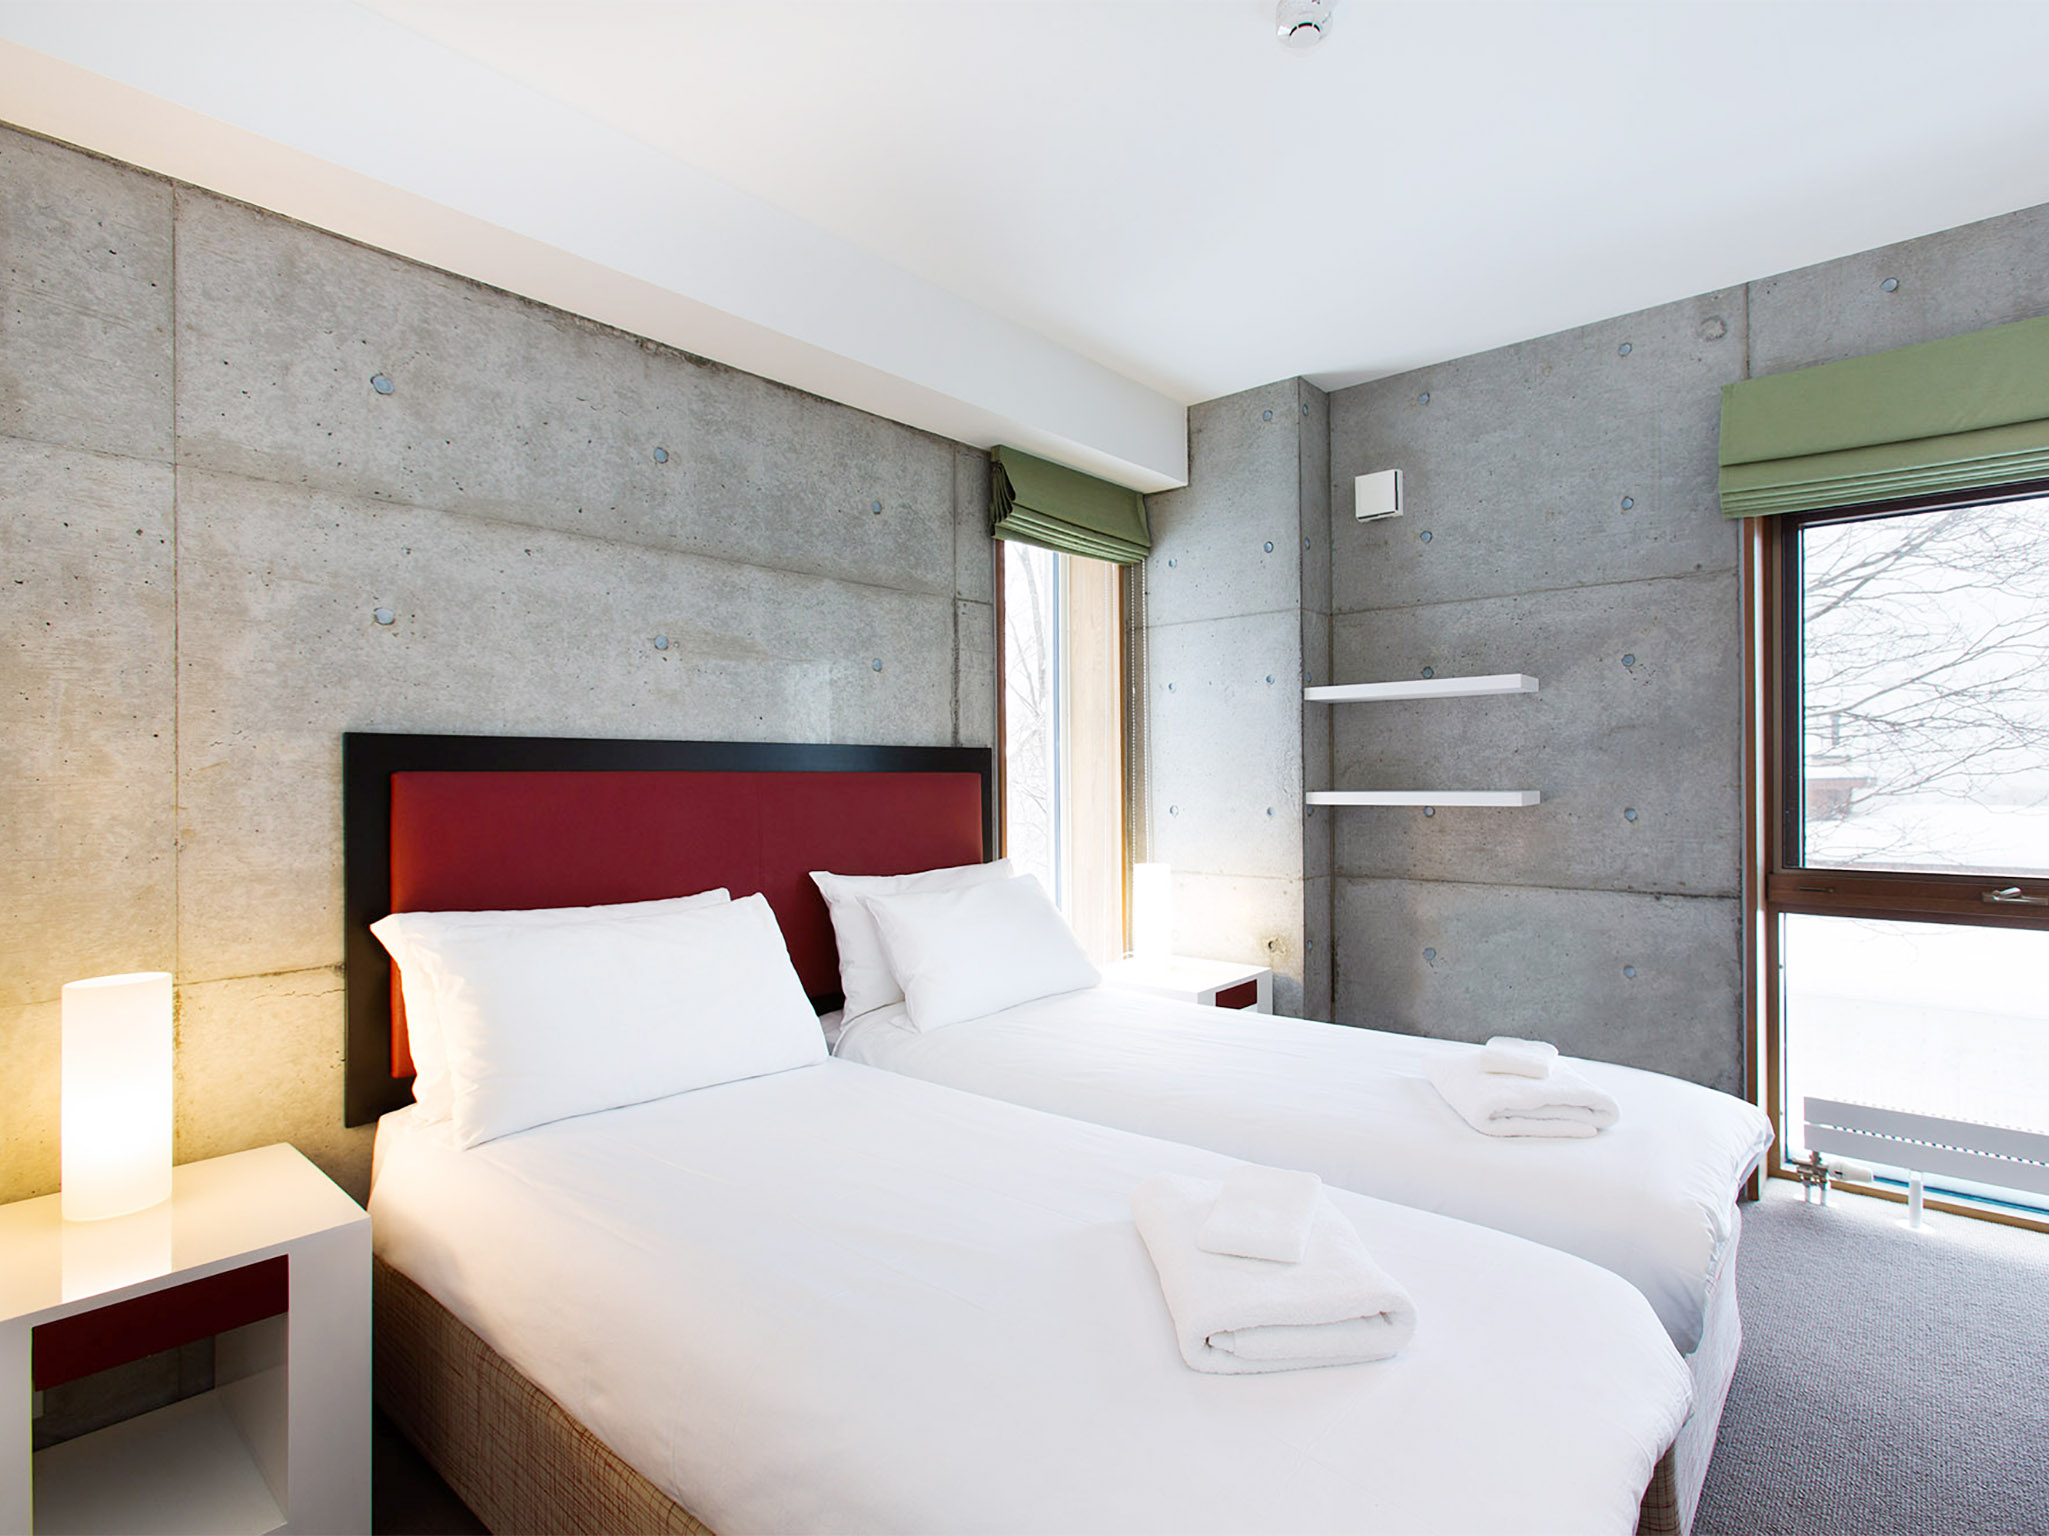 Kita Kitsune Chalet - Guest bedroom setting